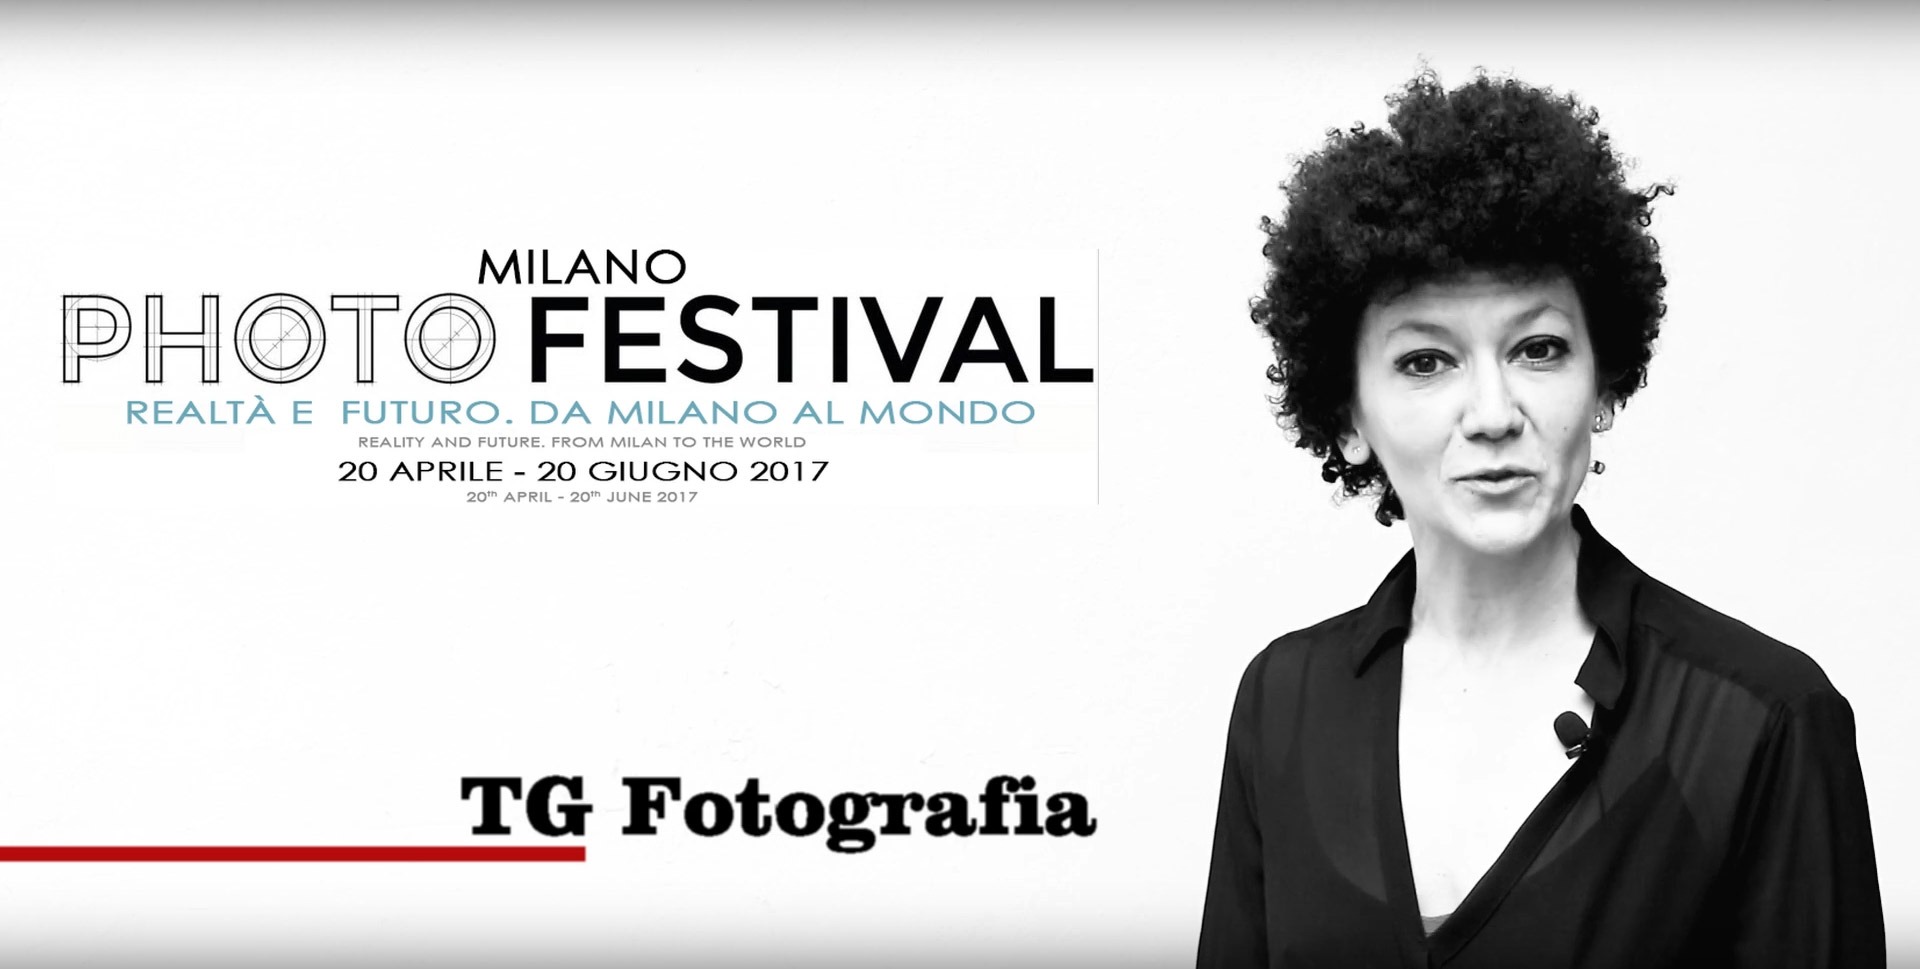 Photofestival 2017